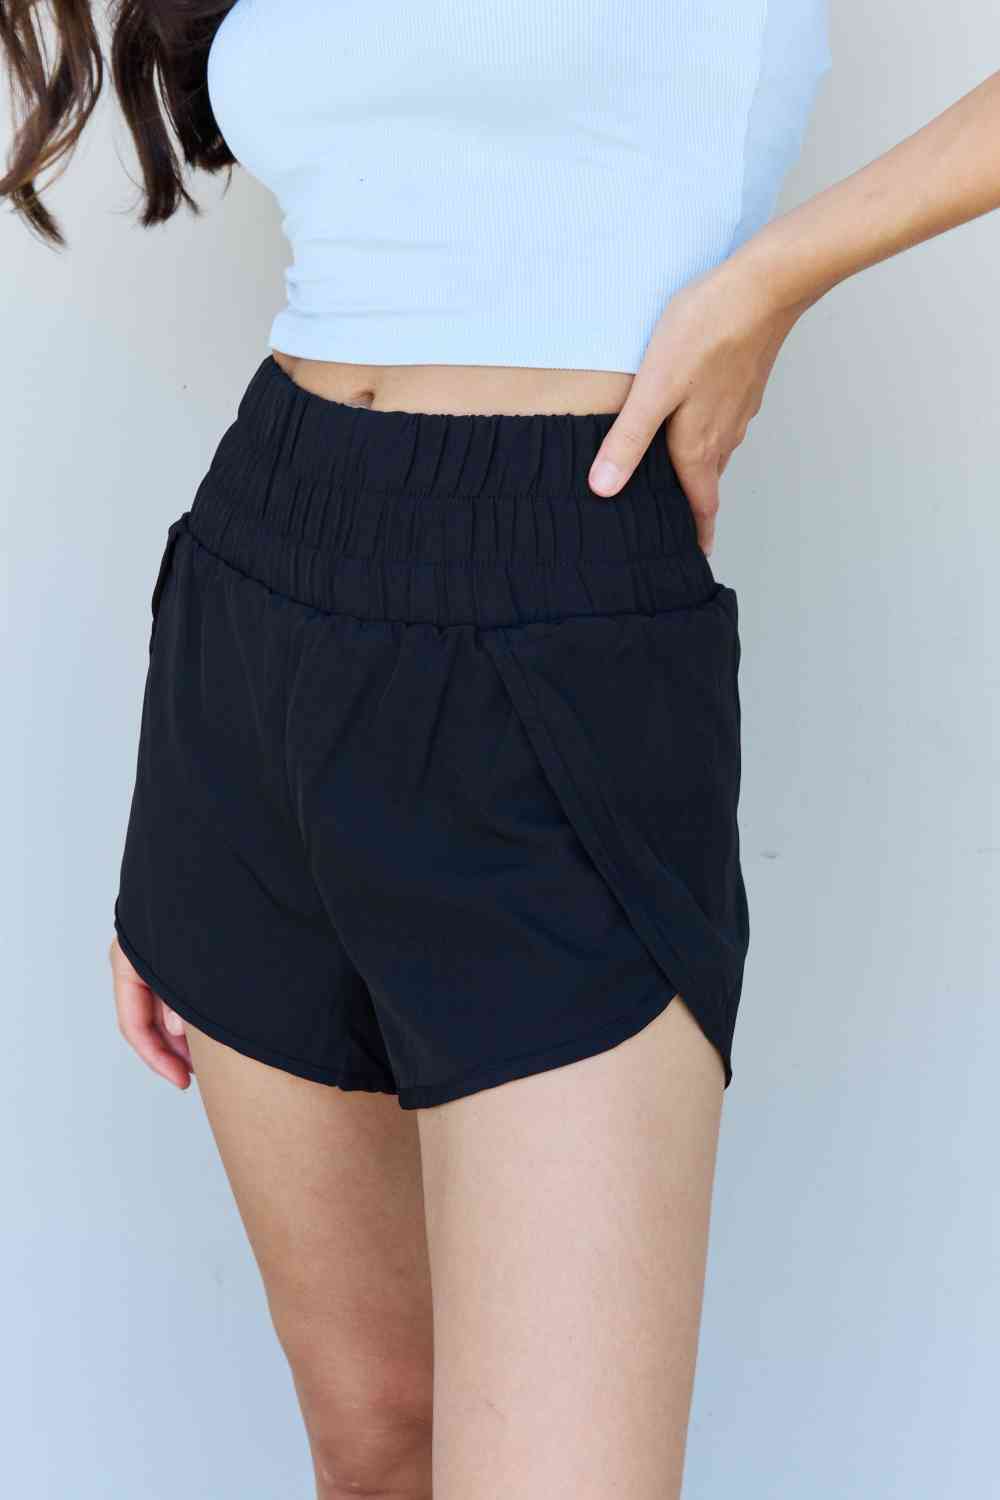 Ettie - Ninexis High Waistband Active Shorts in Black